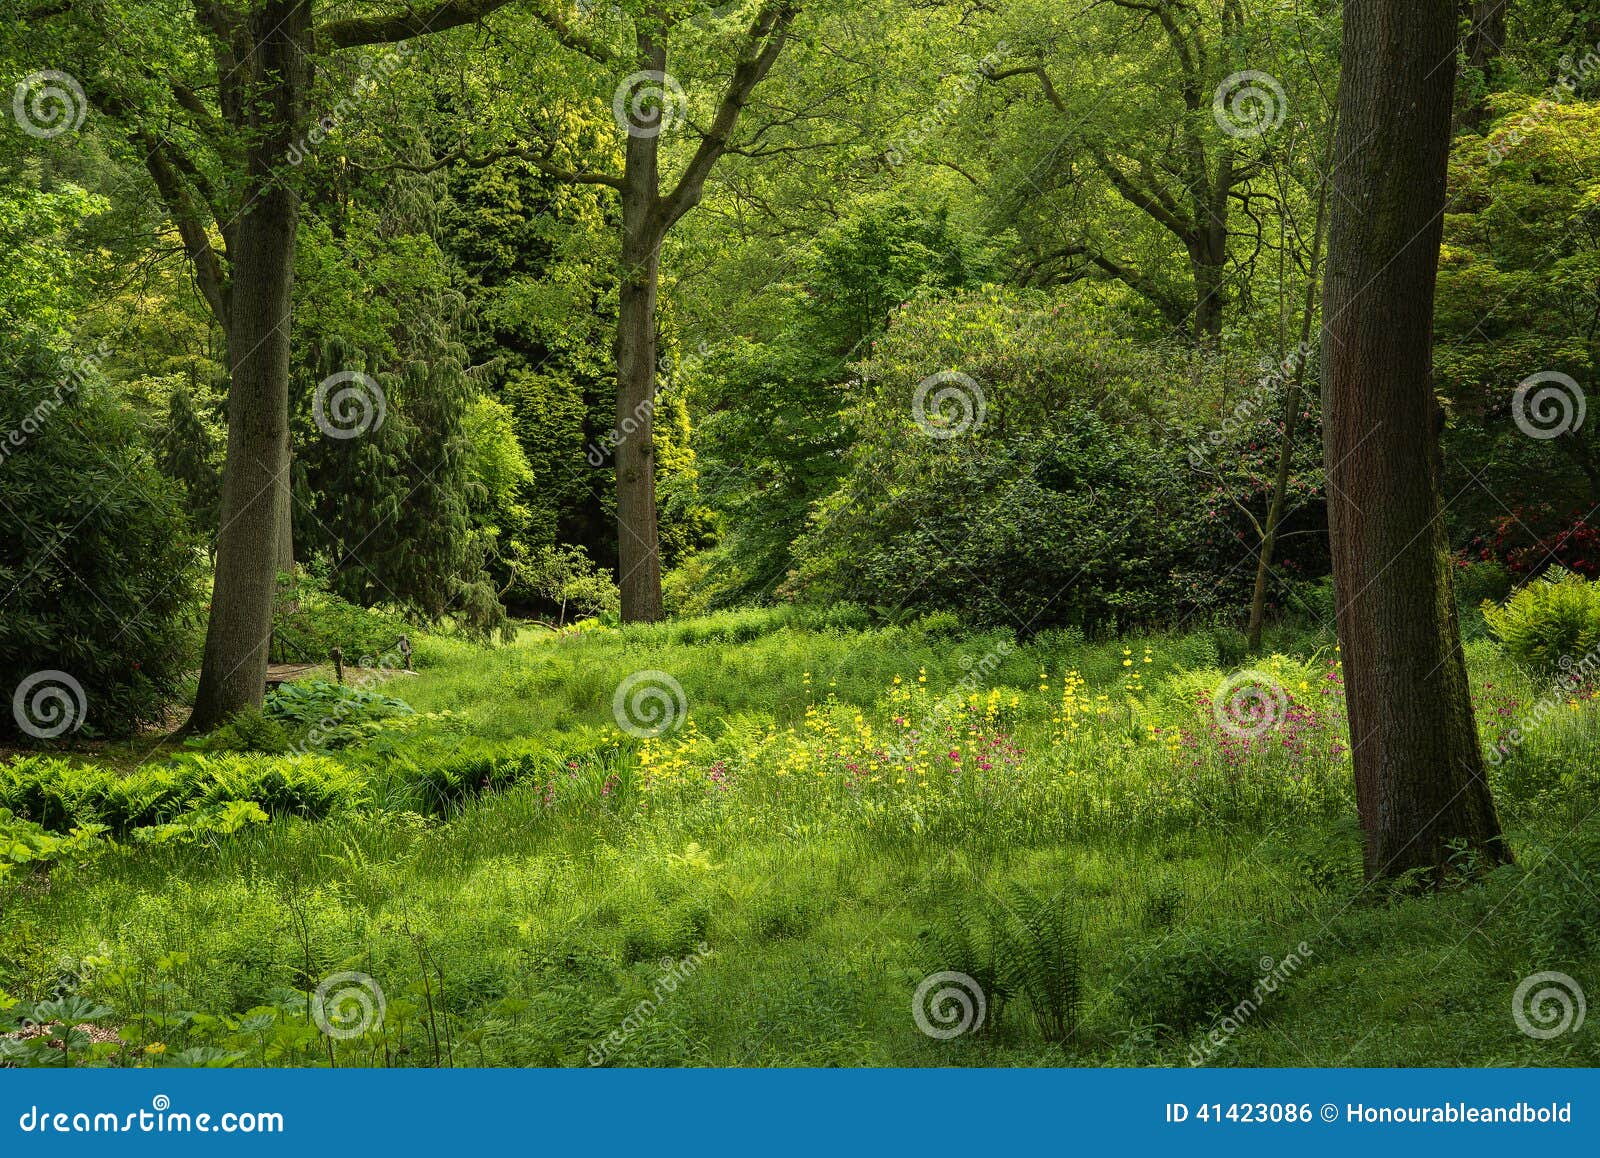 landscape image of beautiful vibrant lush green forest woodland